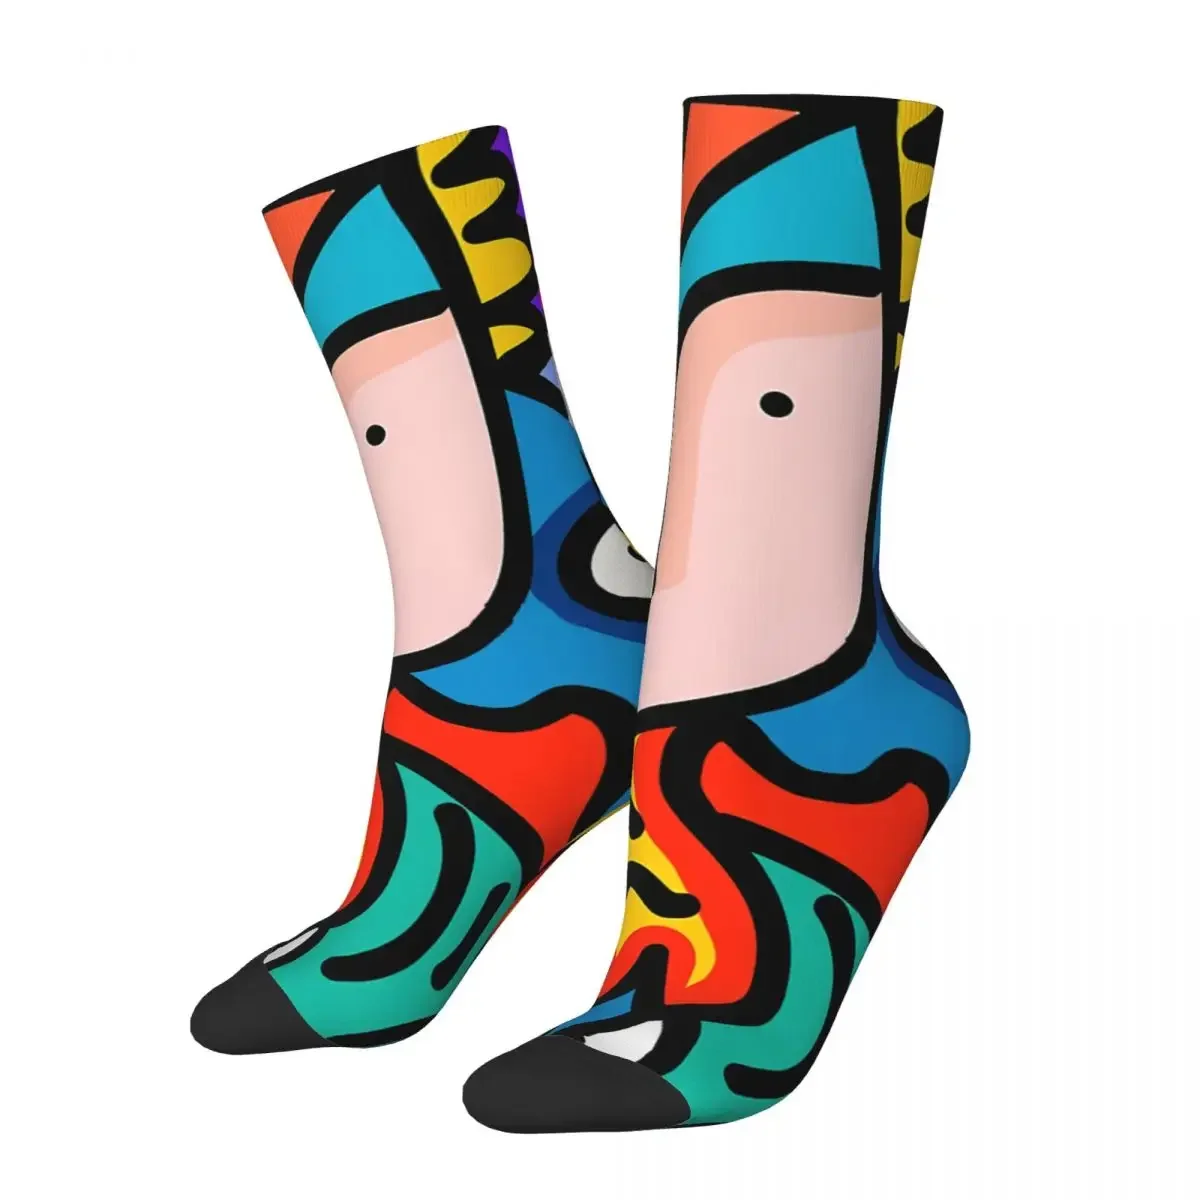 

Happy Men's Socks Joyful And Colorful Retro Harajuku Street Art Graffiti Hip Hop Casual Crew Crazy Sock Gift Pattern Printed